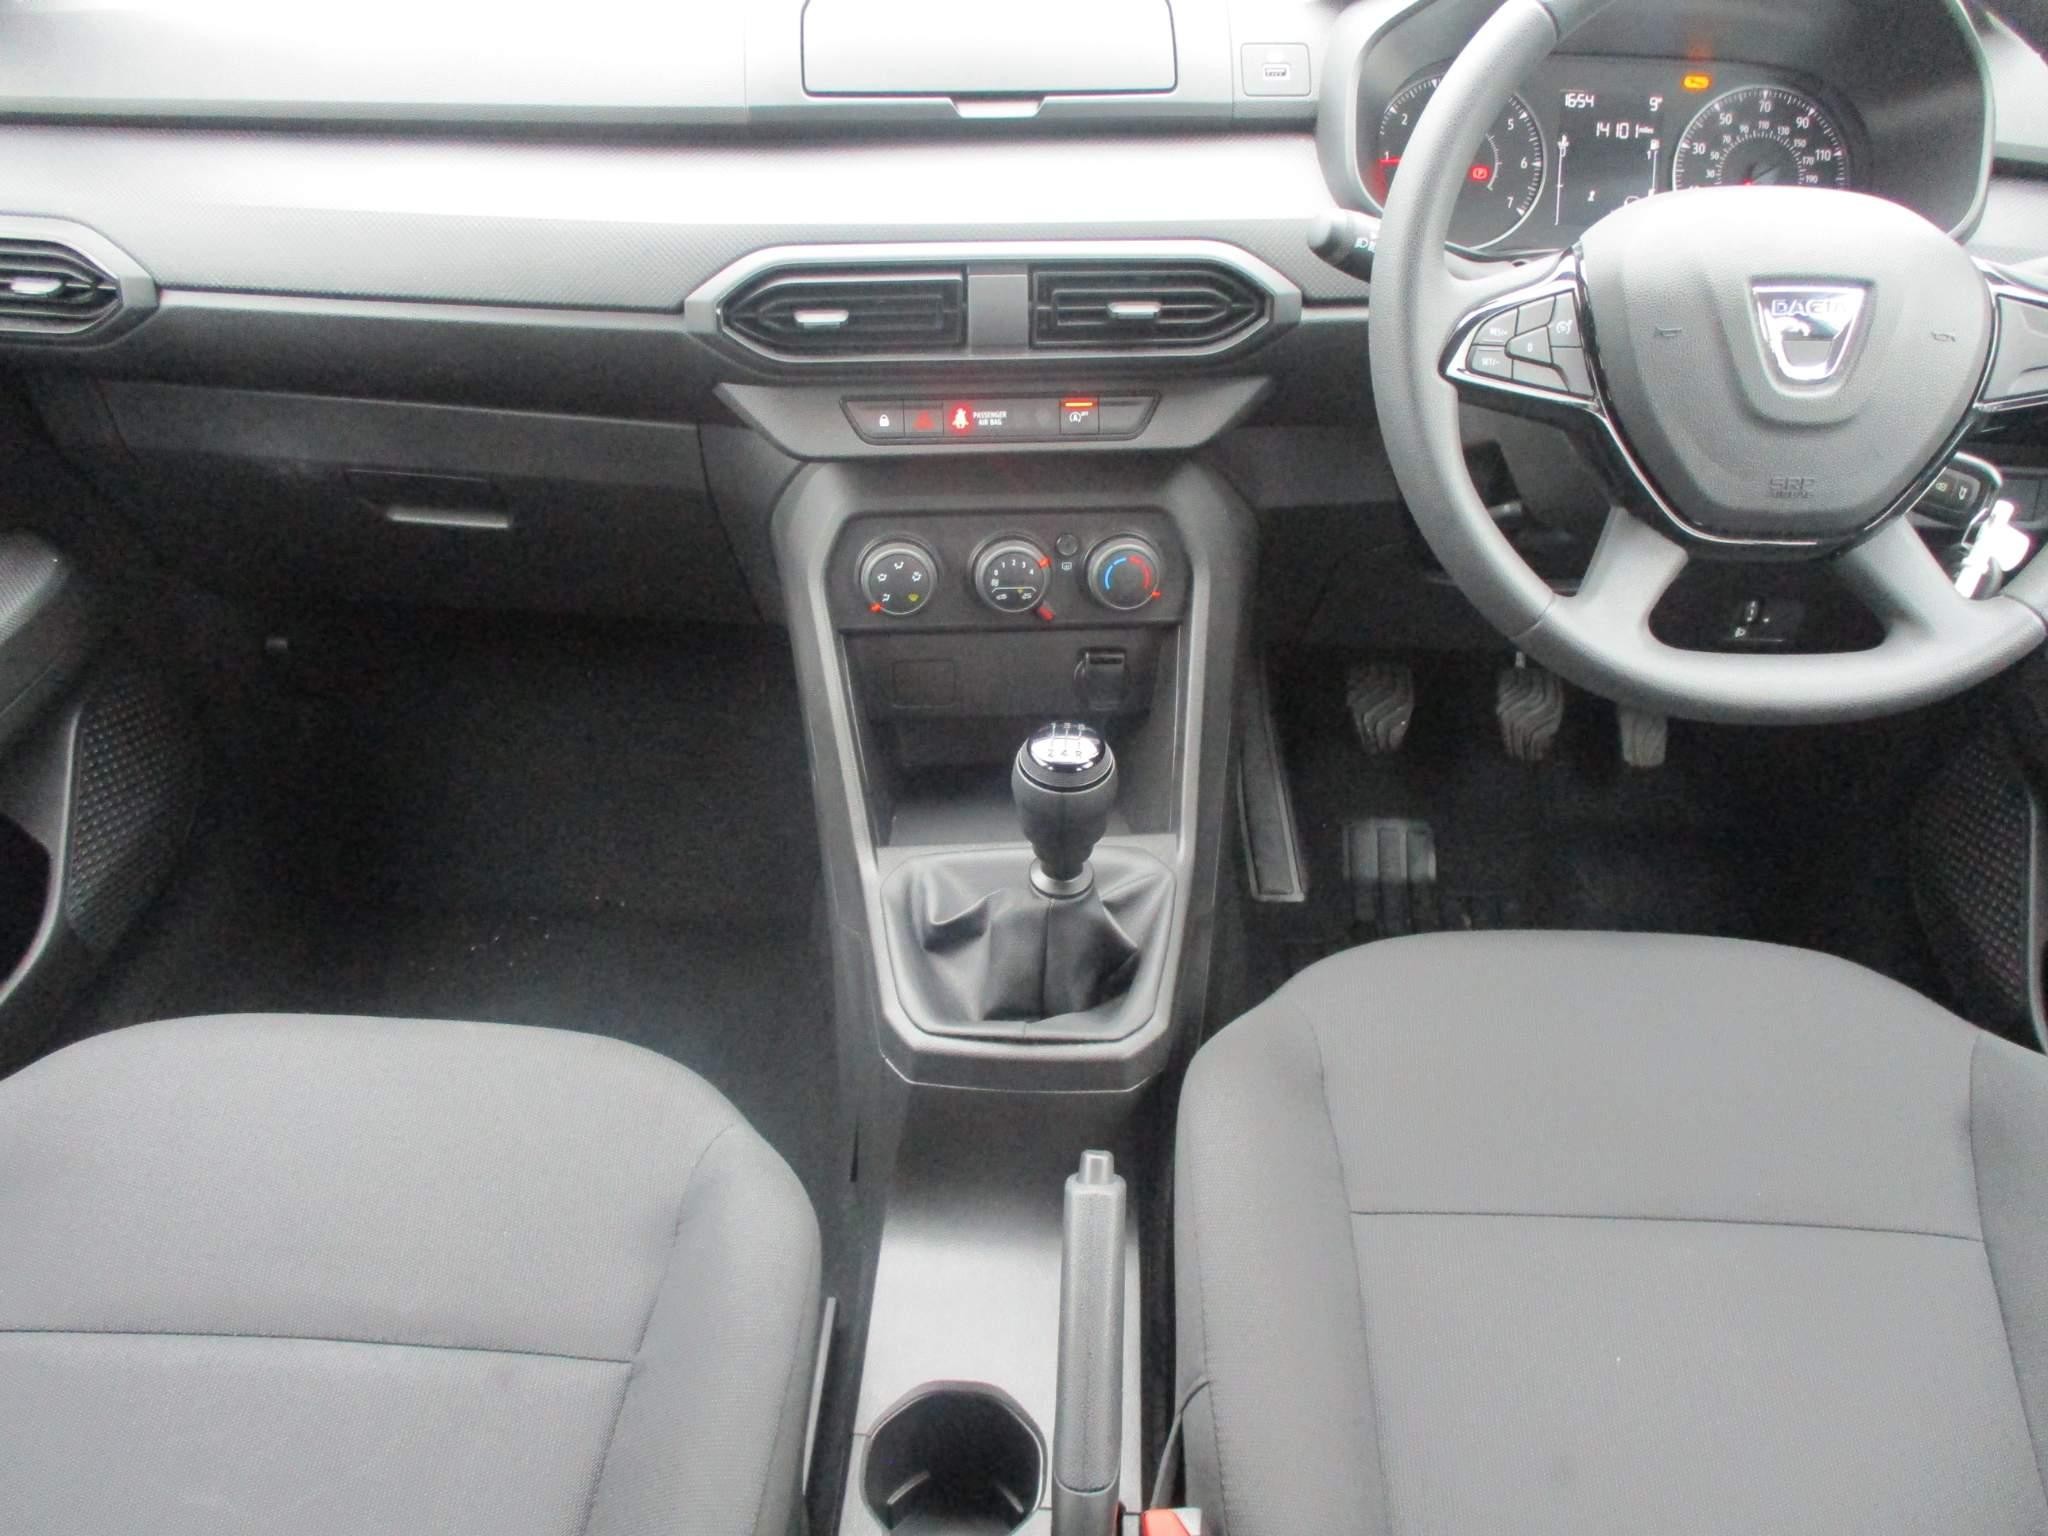 Dacia Sandero Access SCe 65 (YM71GJV) image 11